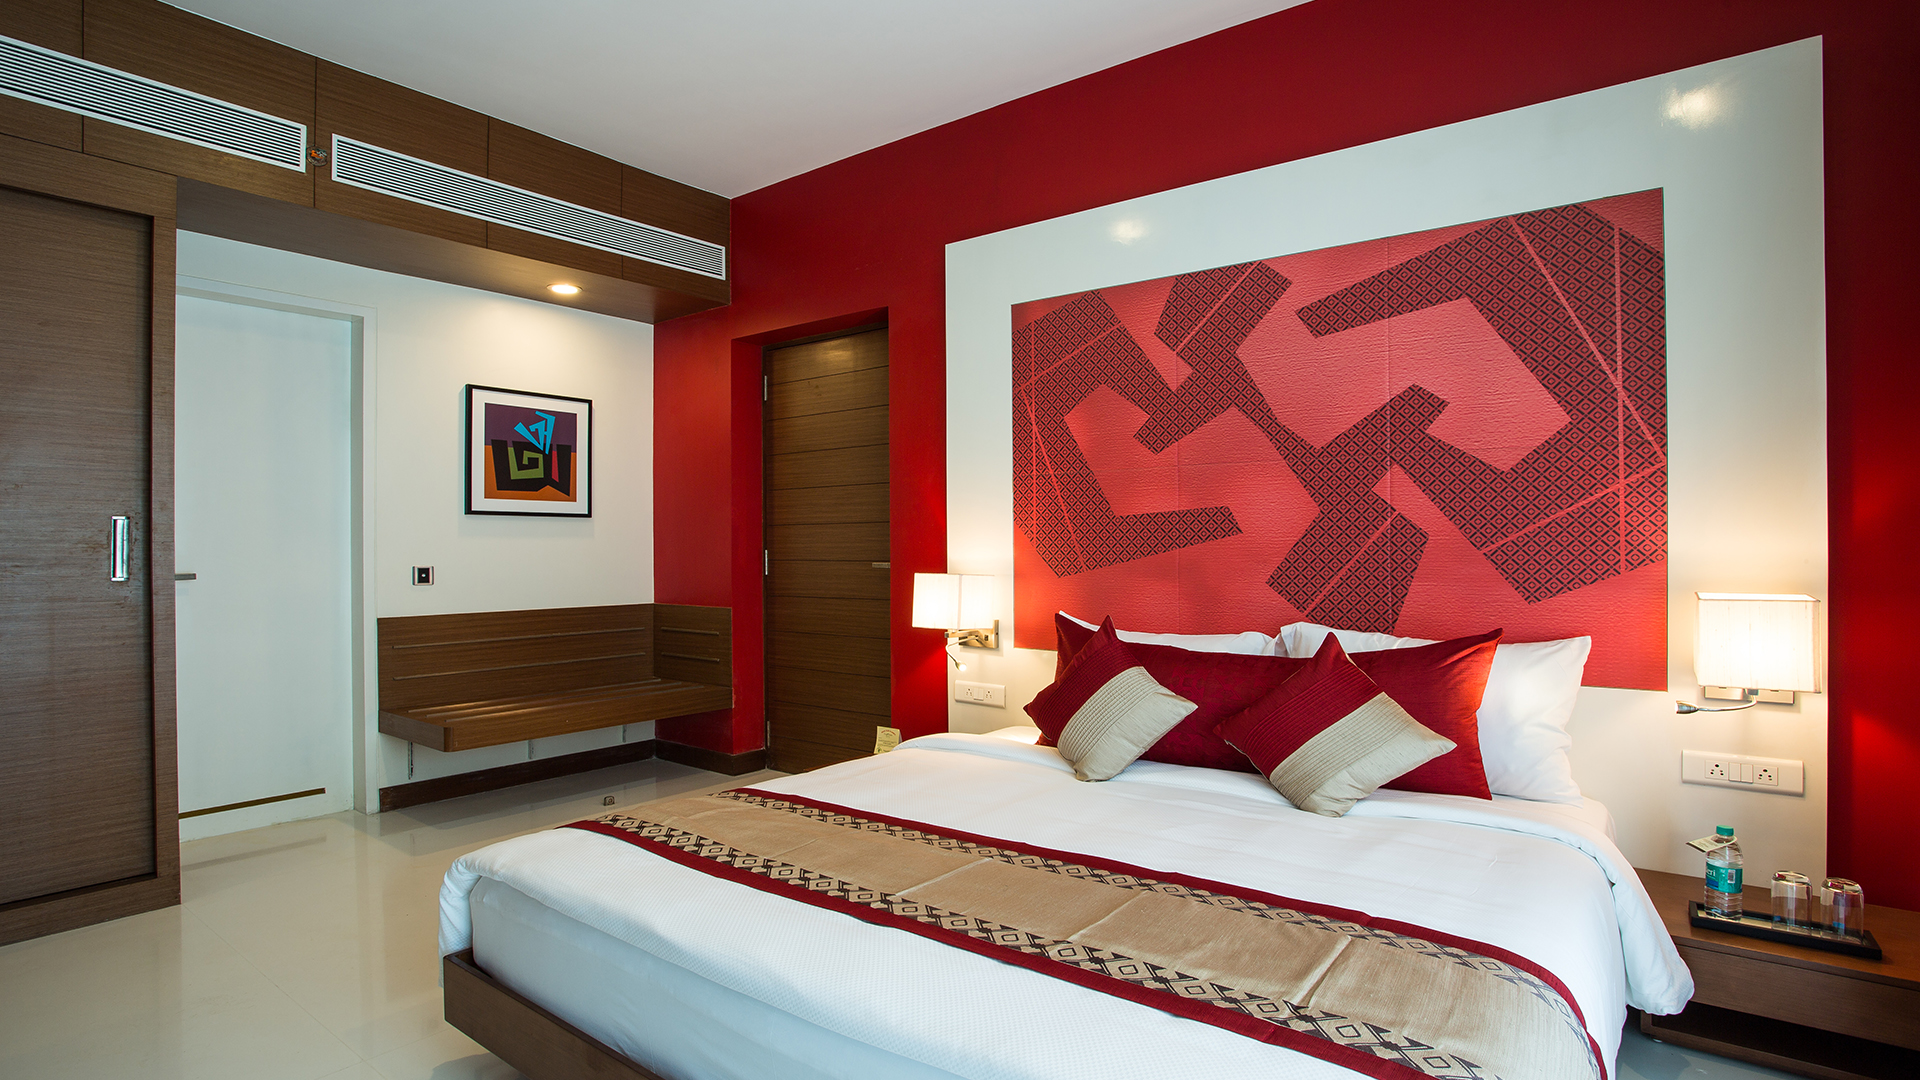 Fern Hotel & Resorts Group Mumbai